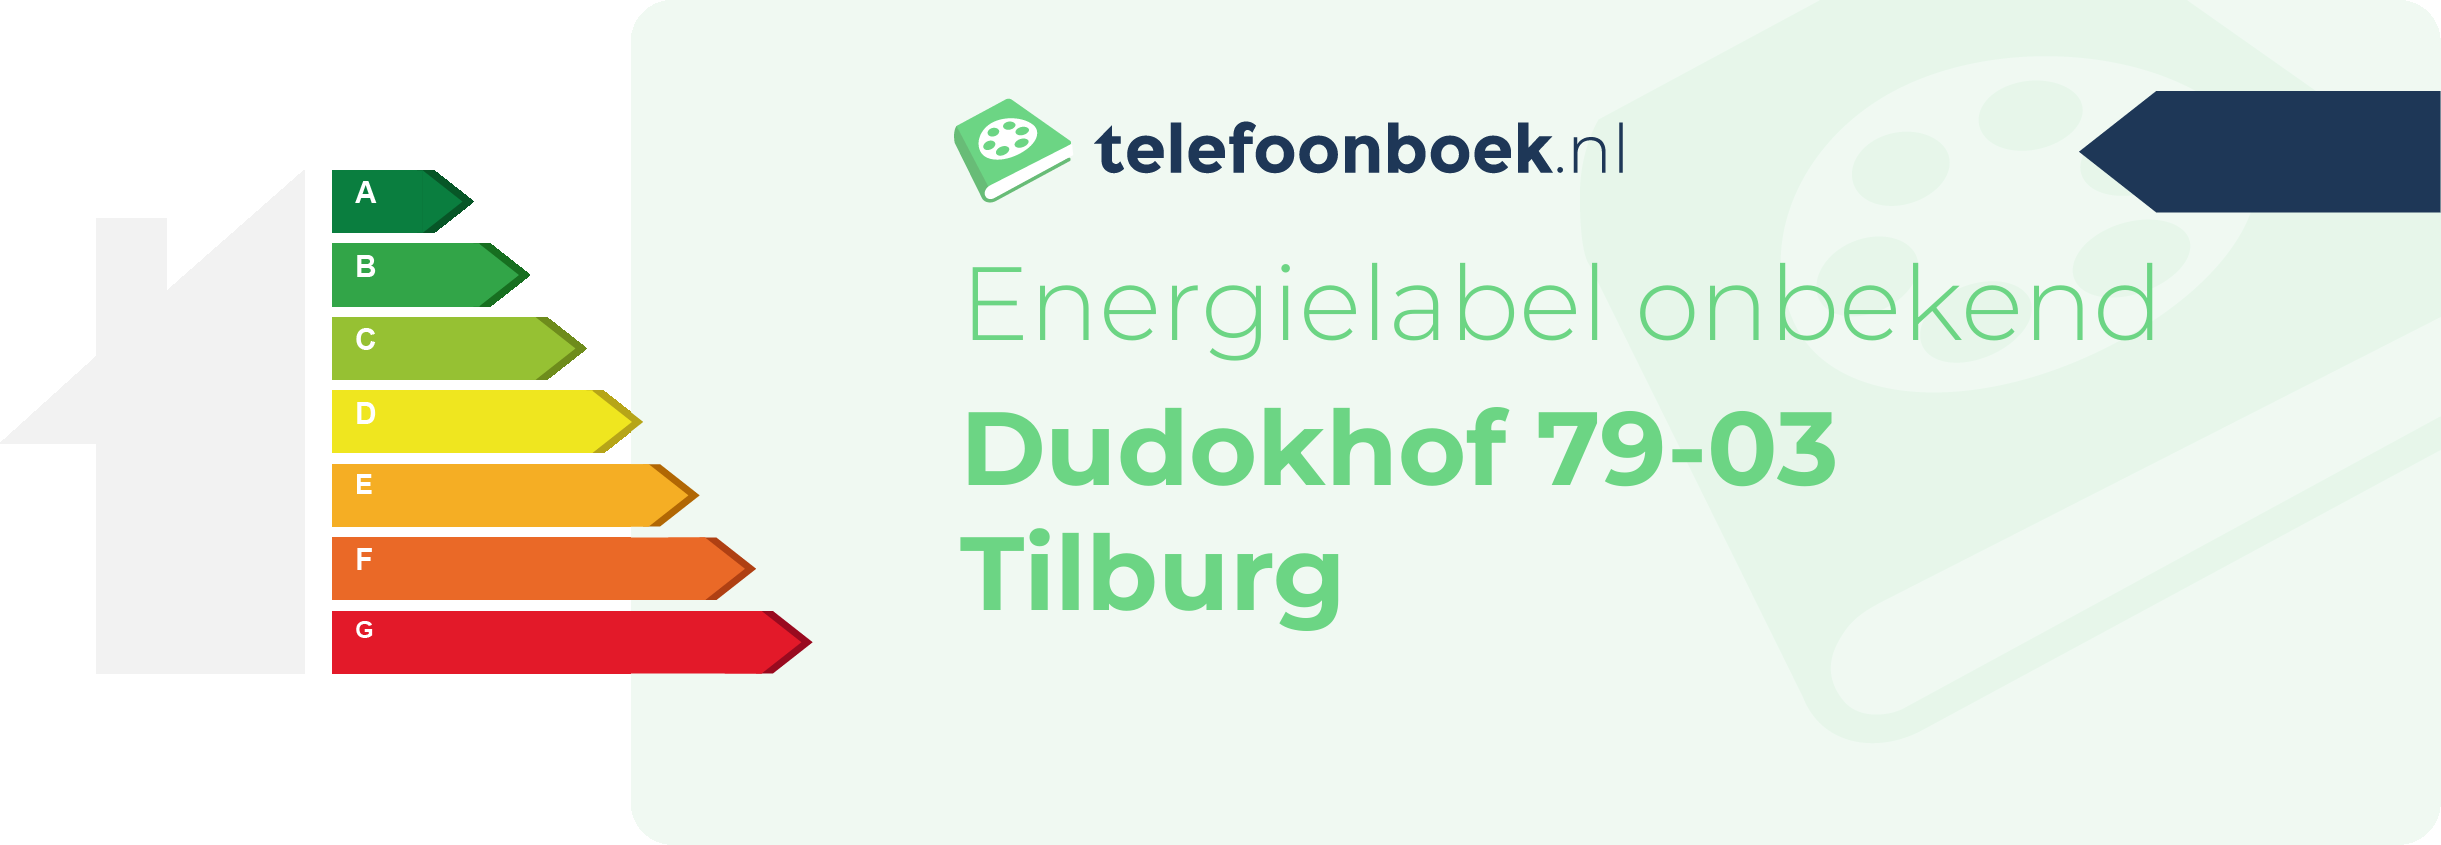 Energielabel Dudokhof 79-03 Tilburg